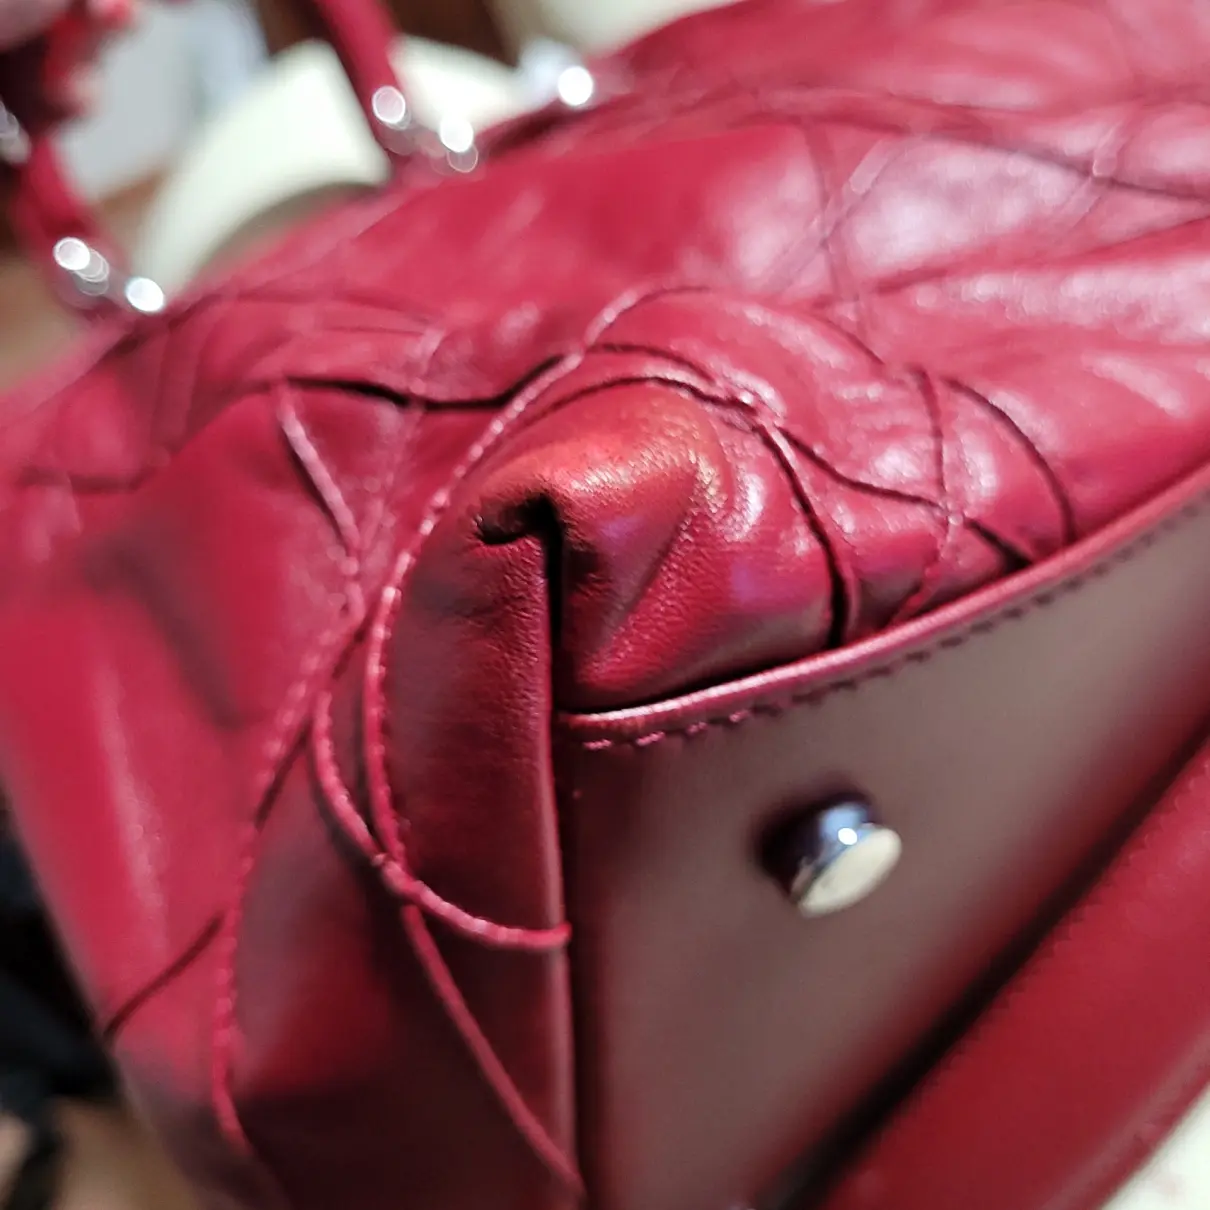 Granville leather handbag Dior